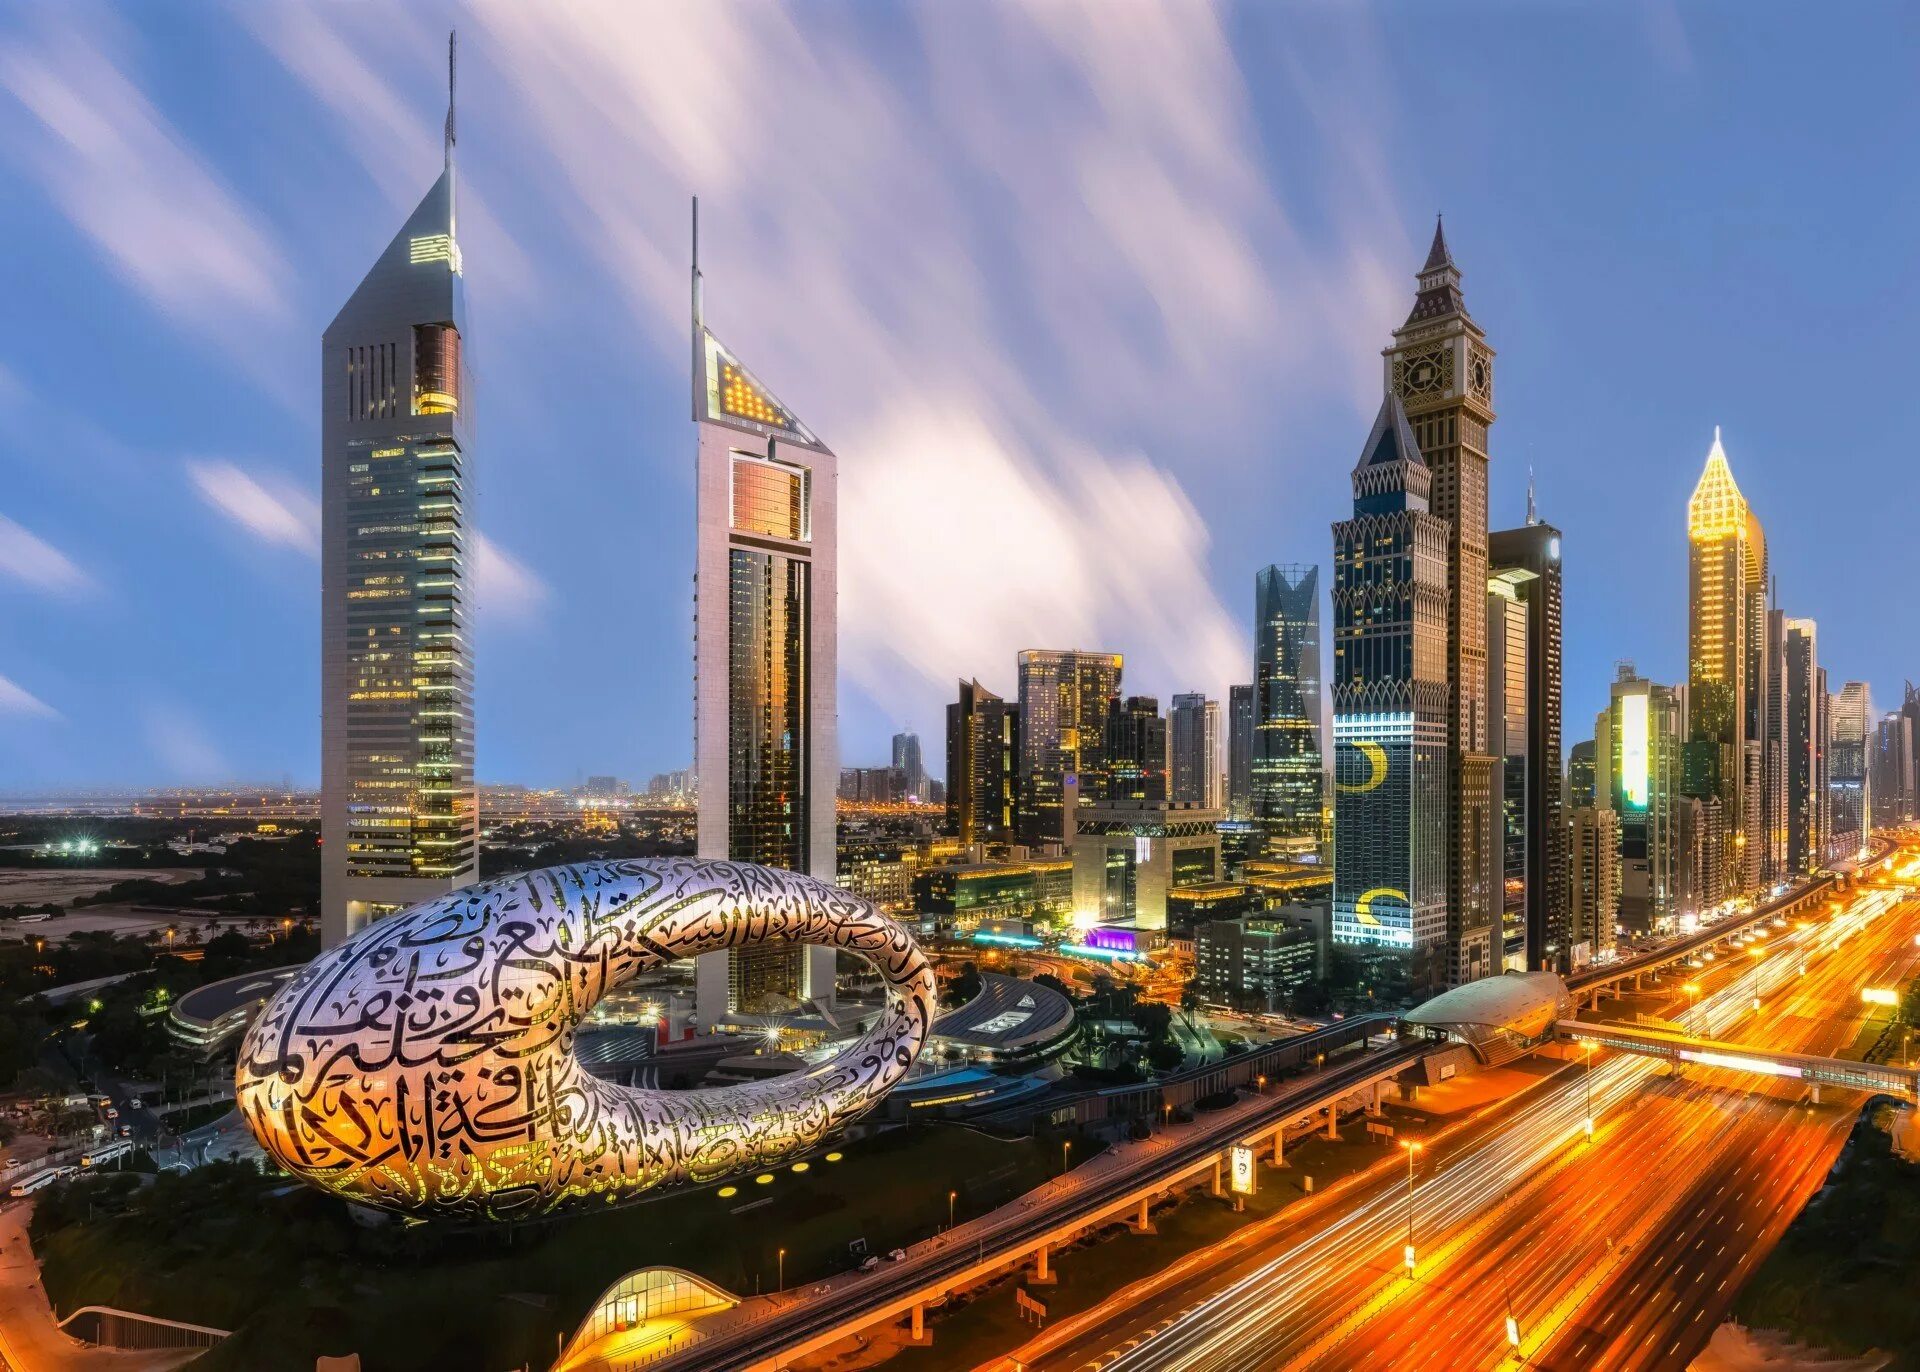 Музей будущего в дубае. Дубай Museum of the Future. Дубай 2022. Музей будущего в Дубае Дубай, ОАЭ.